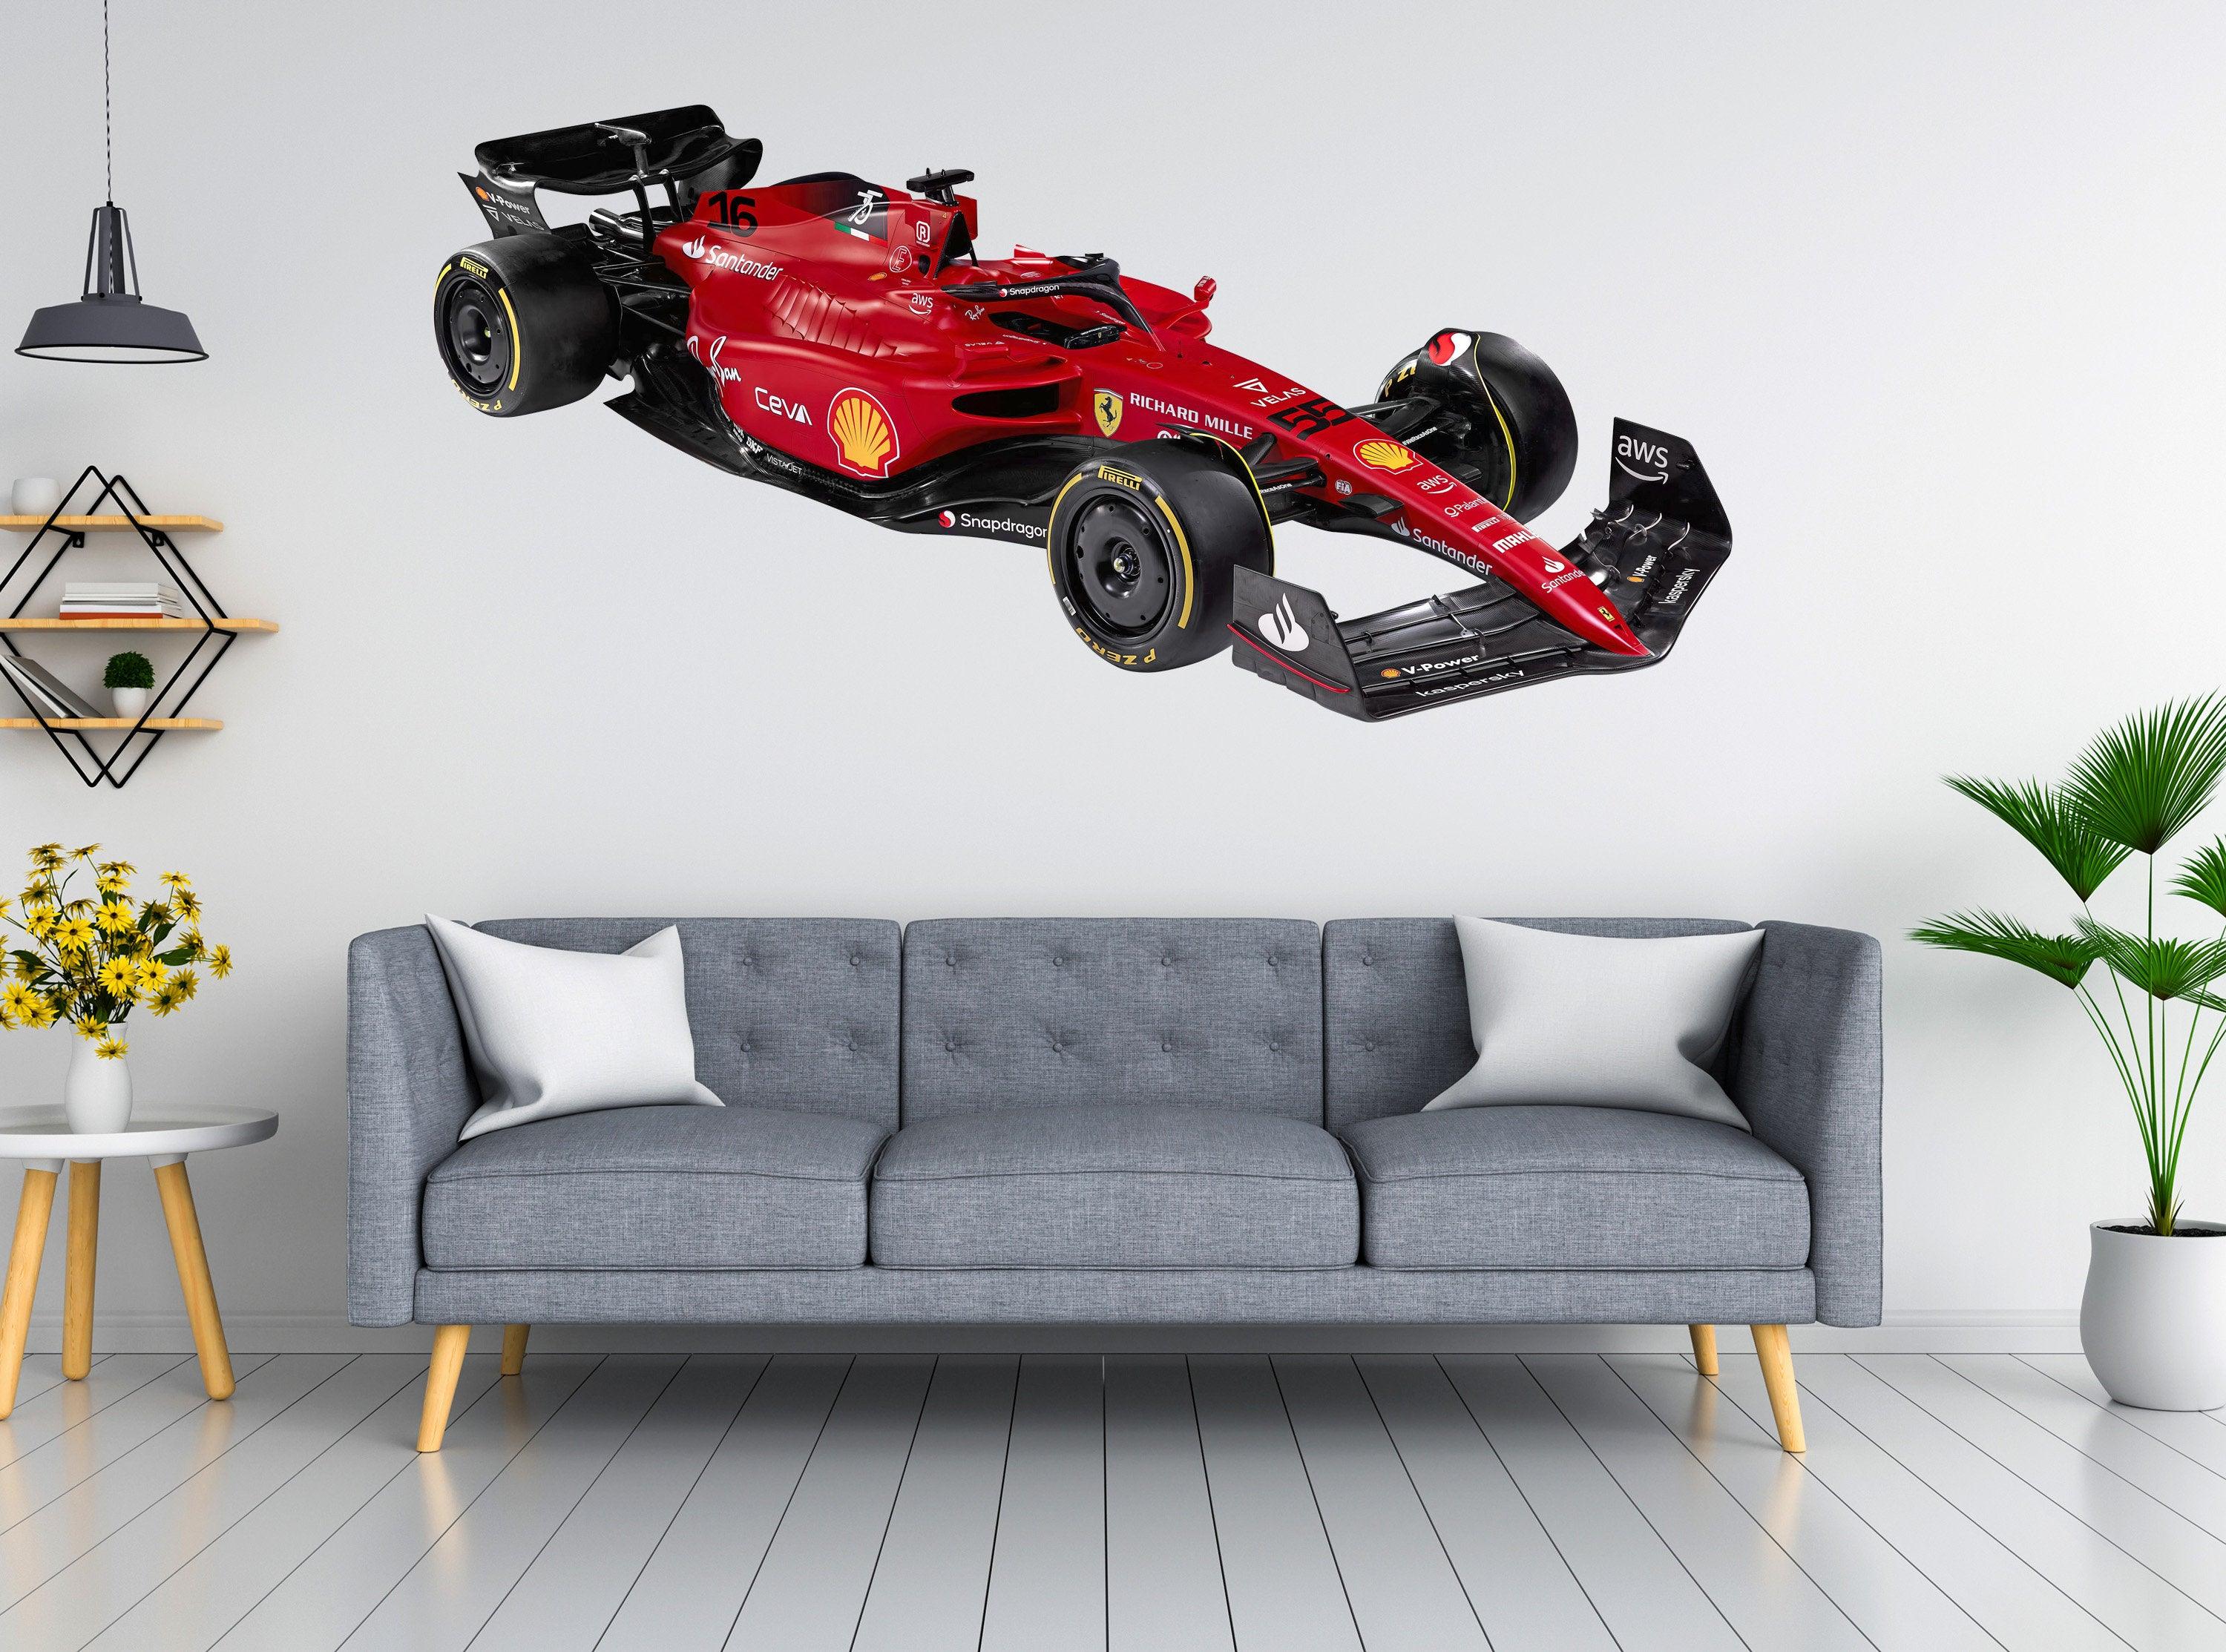 2022 Ferrari #16 and #55 Wall Decal Sticker, Formula 1 Stickers, F1